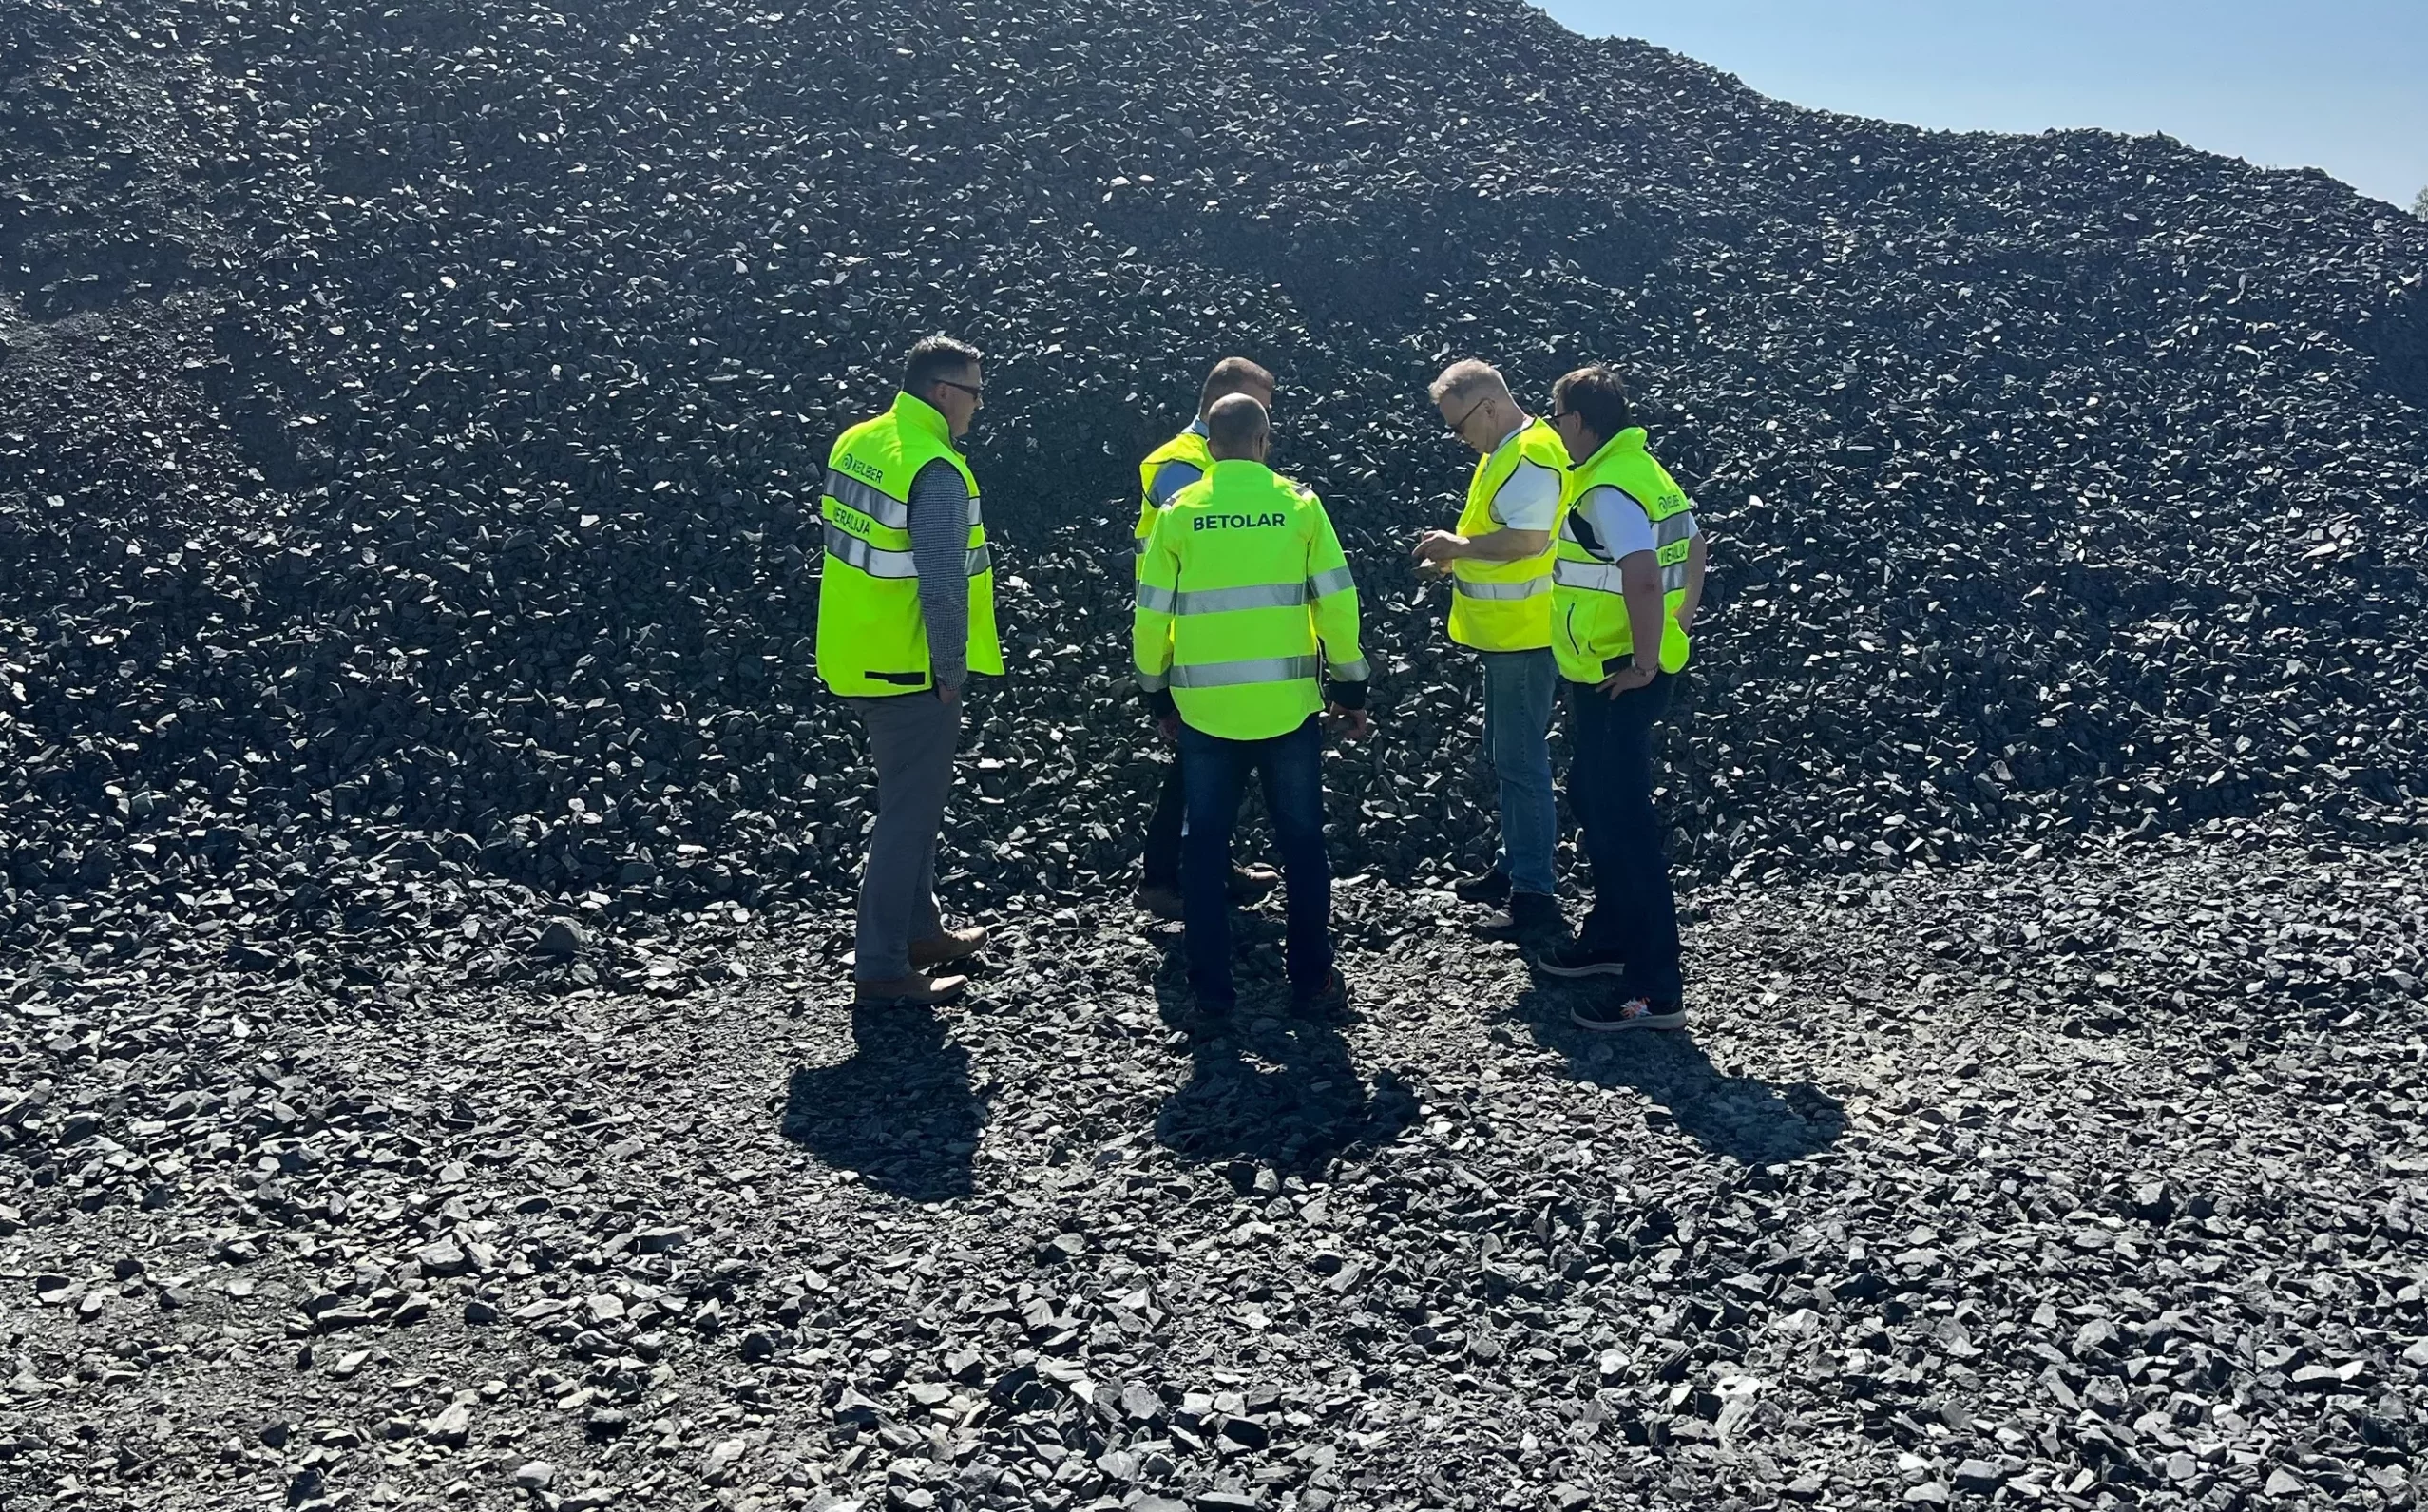 Betolar, Norge Mineraler partner on sustainable mining solutions pathway in Norway - International Mining